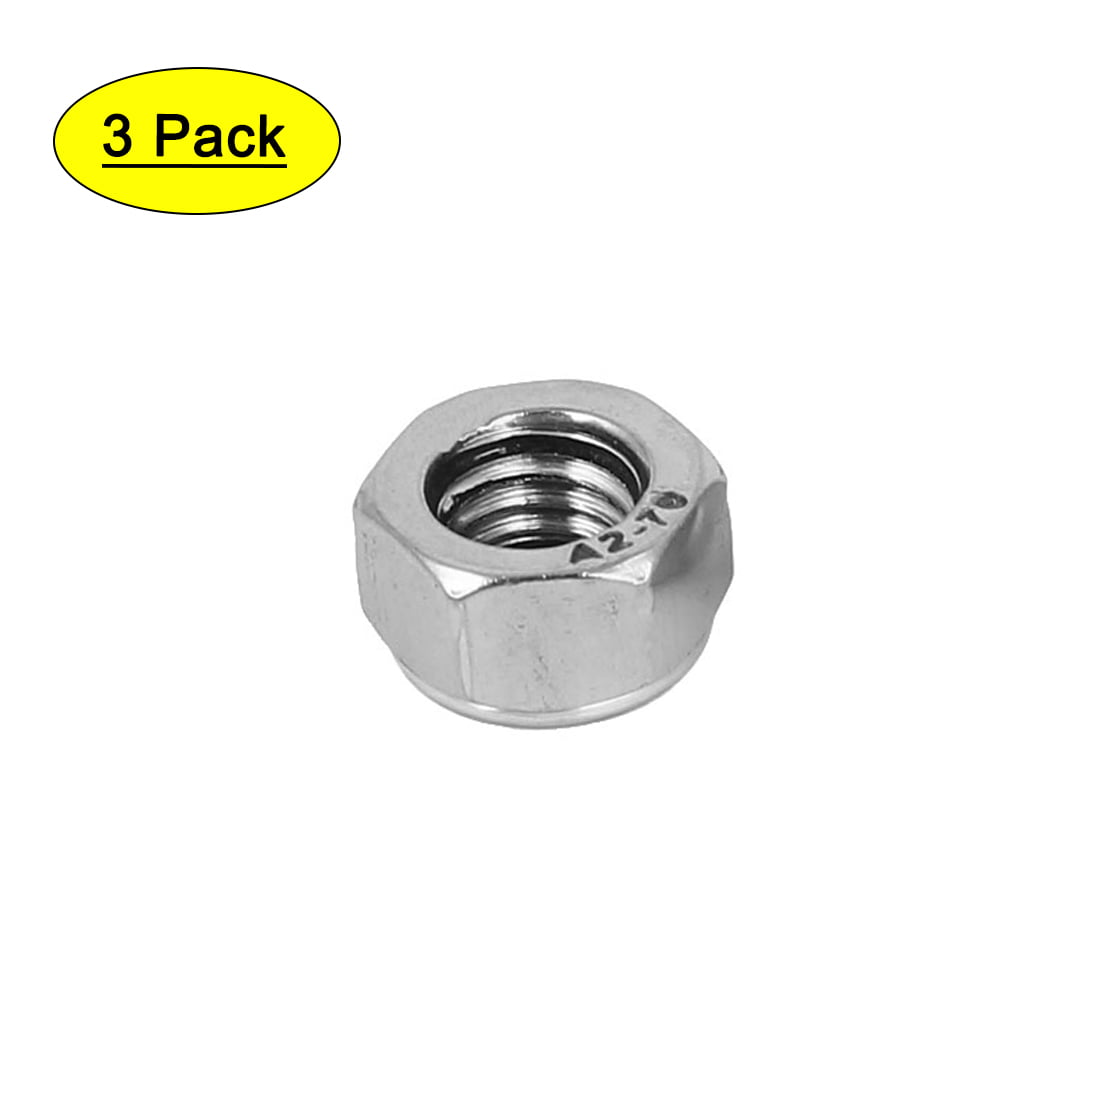 M2 M3 M4 Metal Locking Nut Self-Locking Hexagonal Nuts 304 Stainless Steel Nuts 